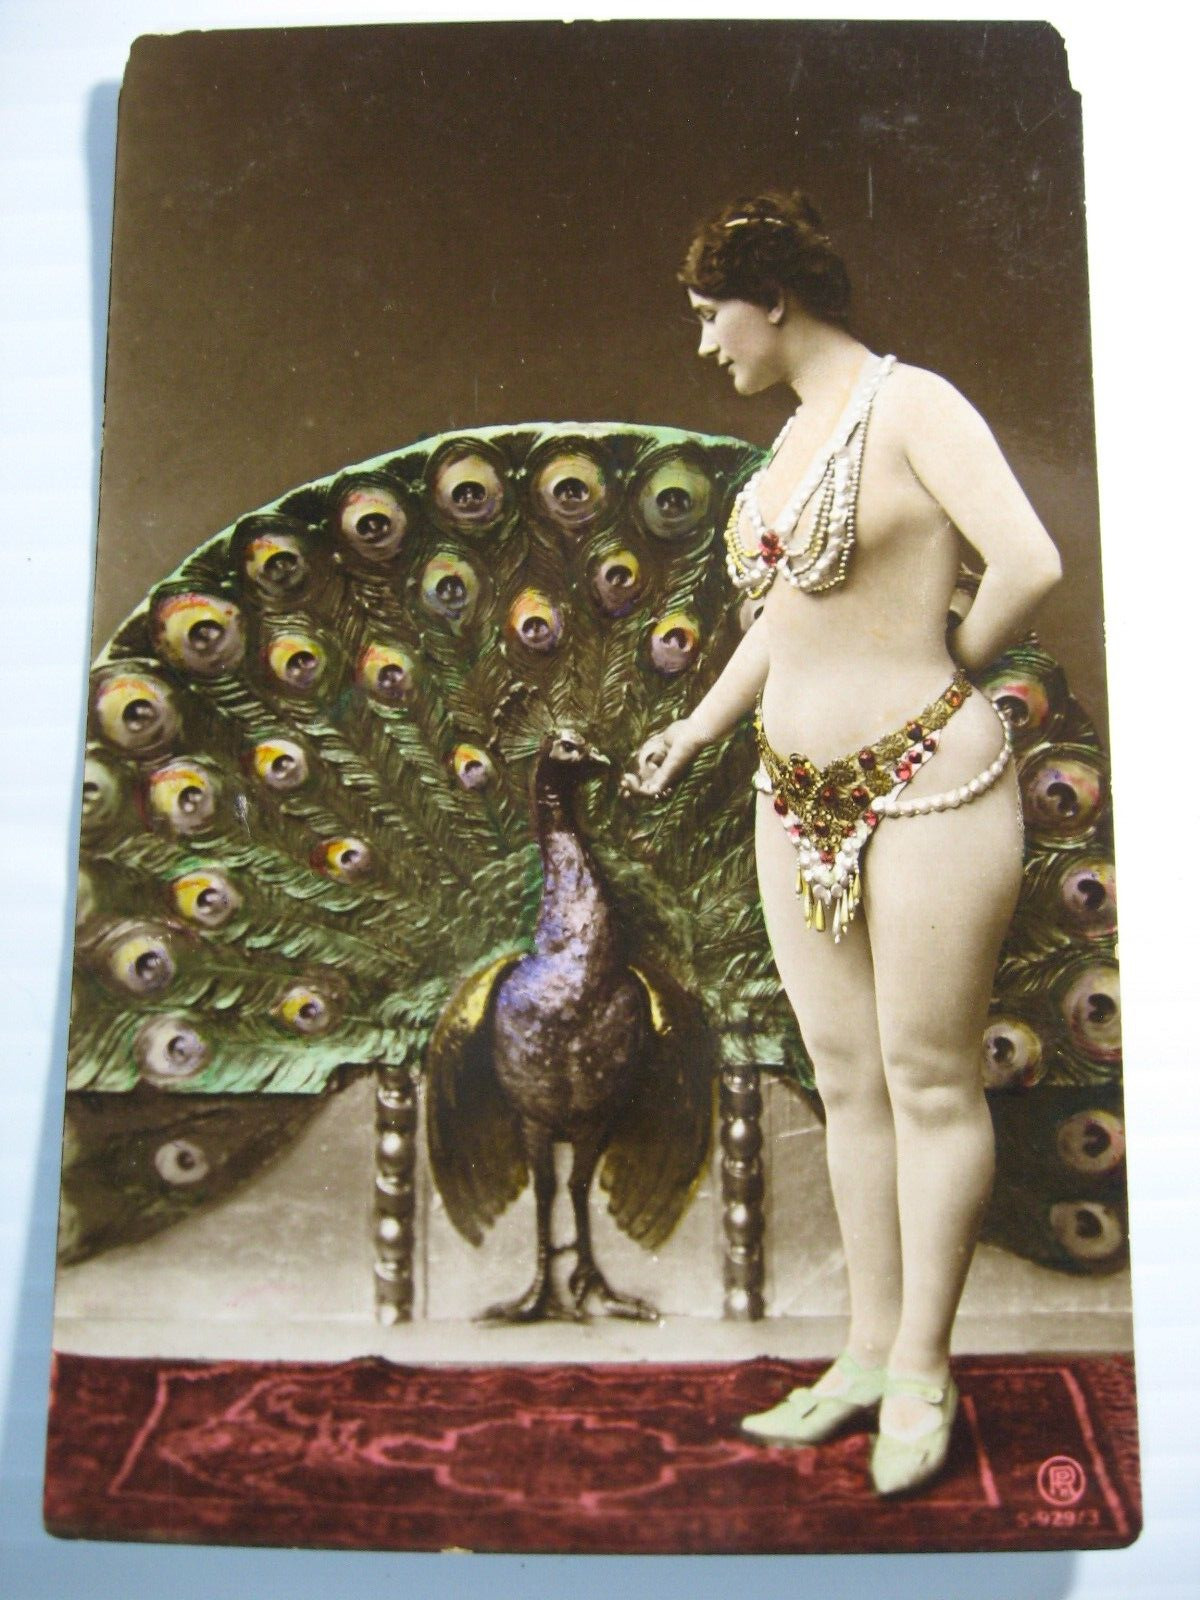 ORIGINAL VERY RARE ,VINTAGE 1905 ARTISTIC EROTIC PHOTO POSTCARD OF SENSUAL WOMAN